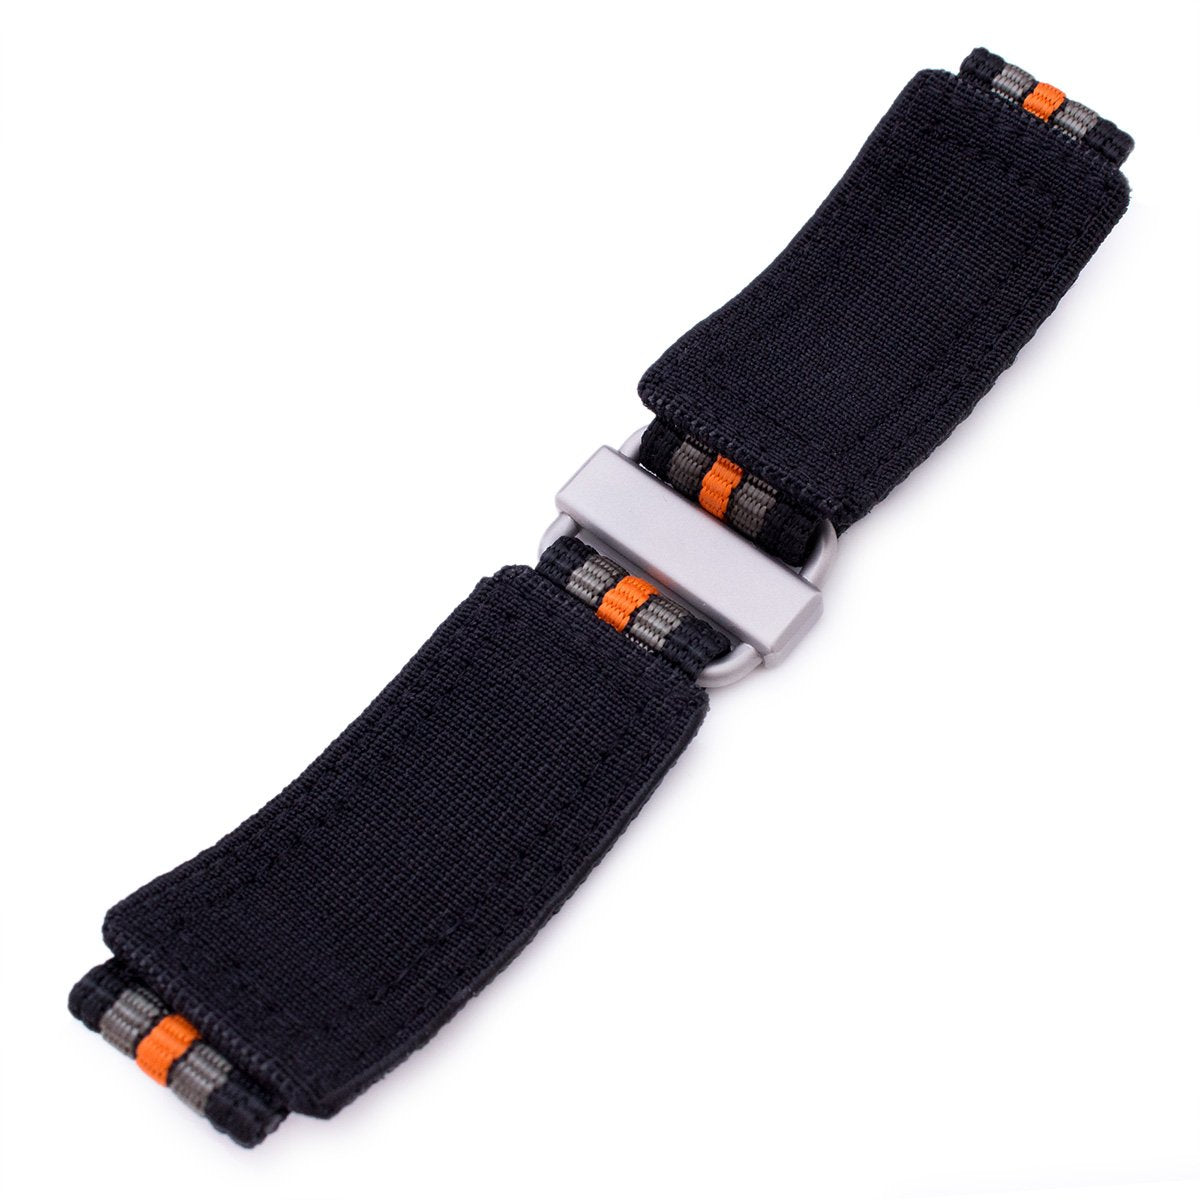 22mm MiLTAT Black Khaki & Orange Stripes 3-D Nylon Velcro Fastener Watch Strap Sandblasted Buckle Strapcode Watch Bands